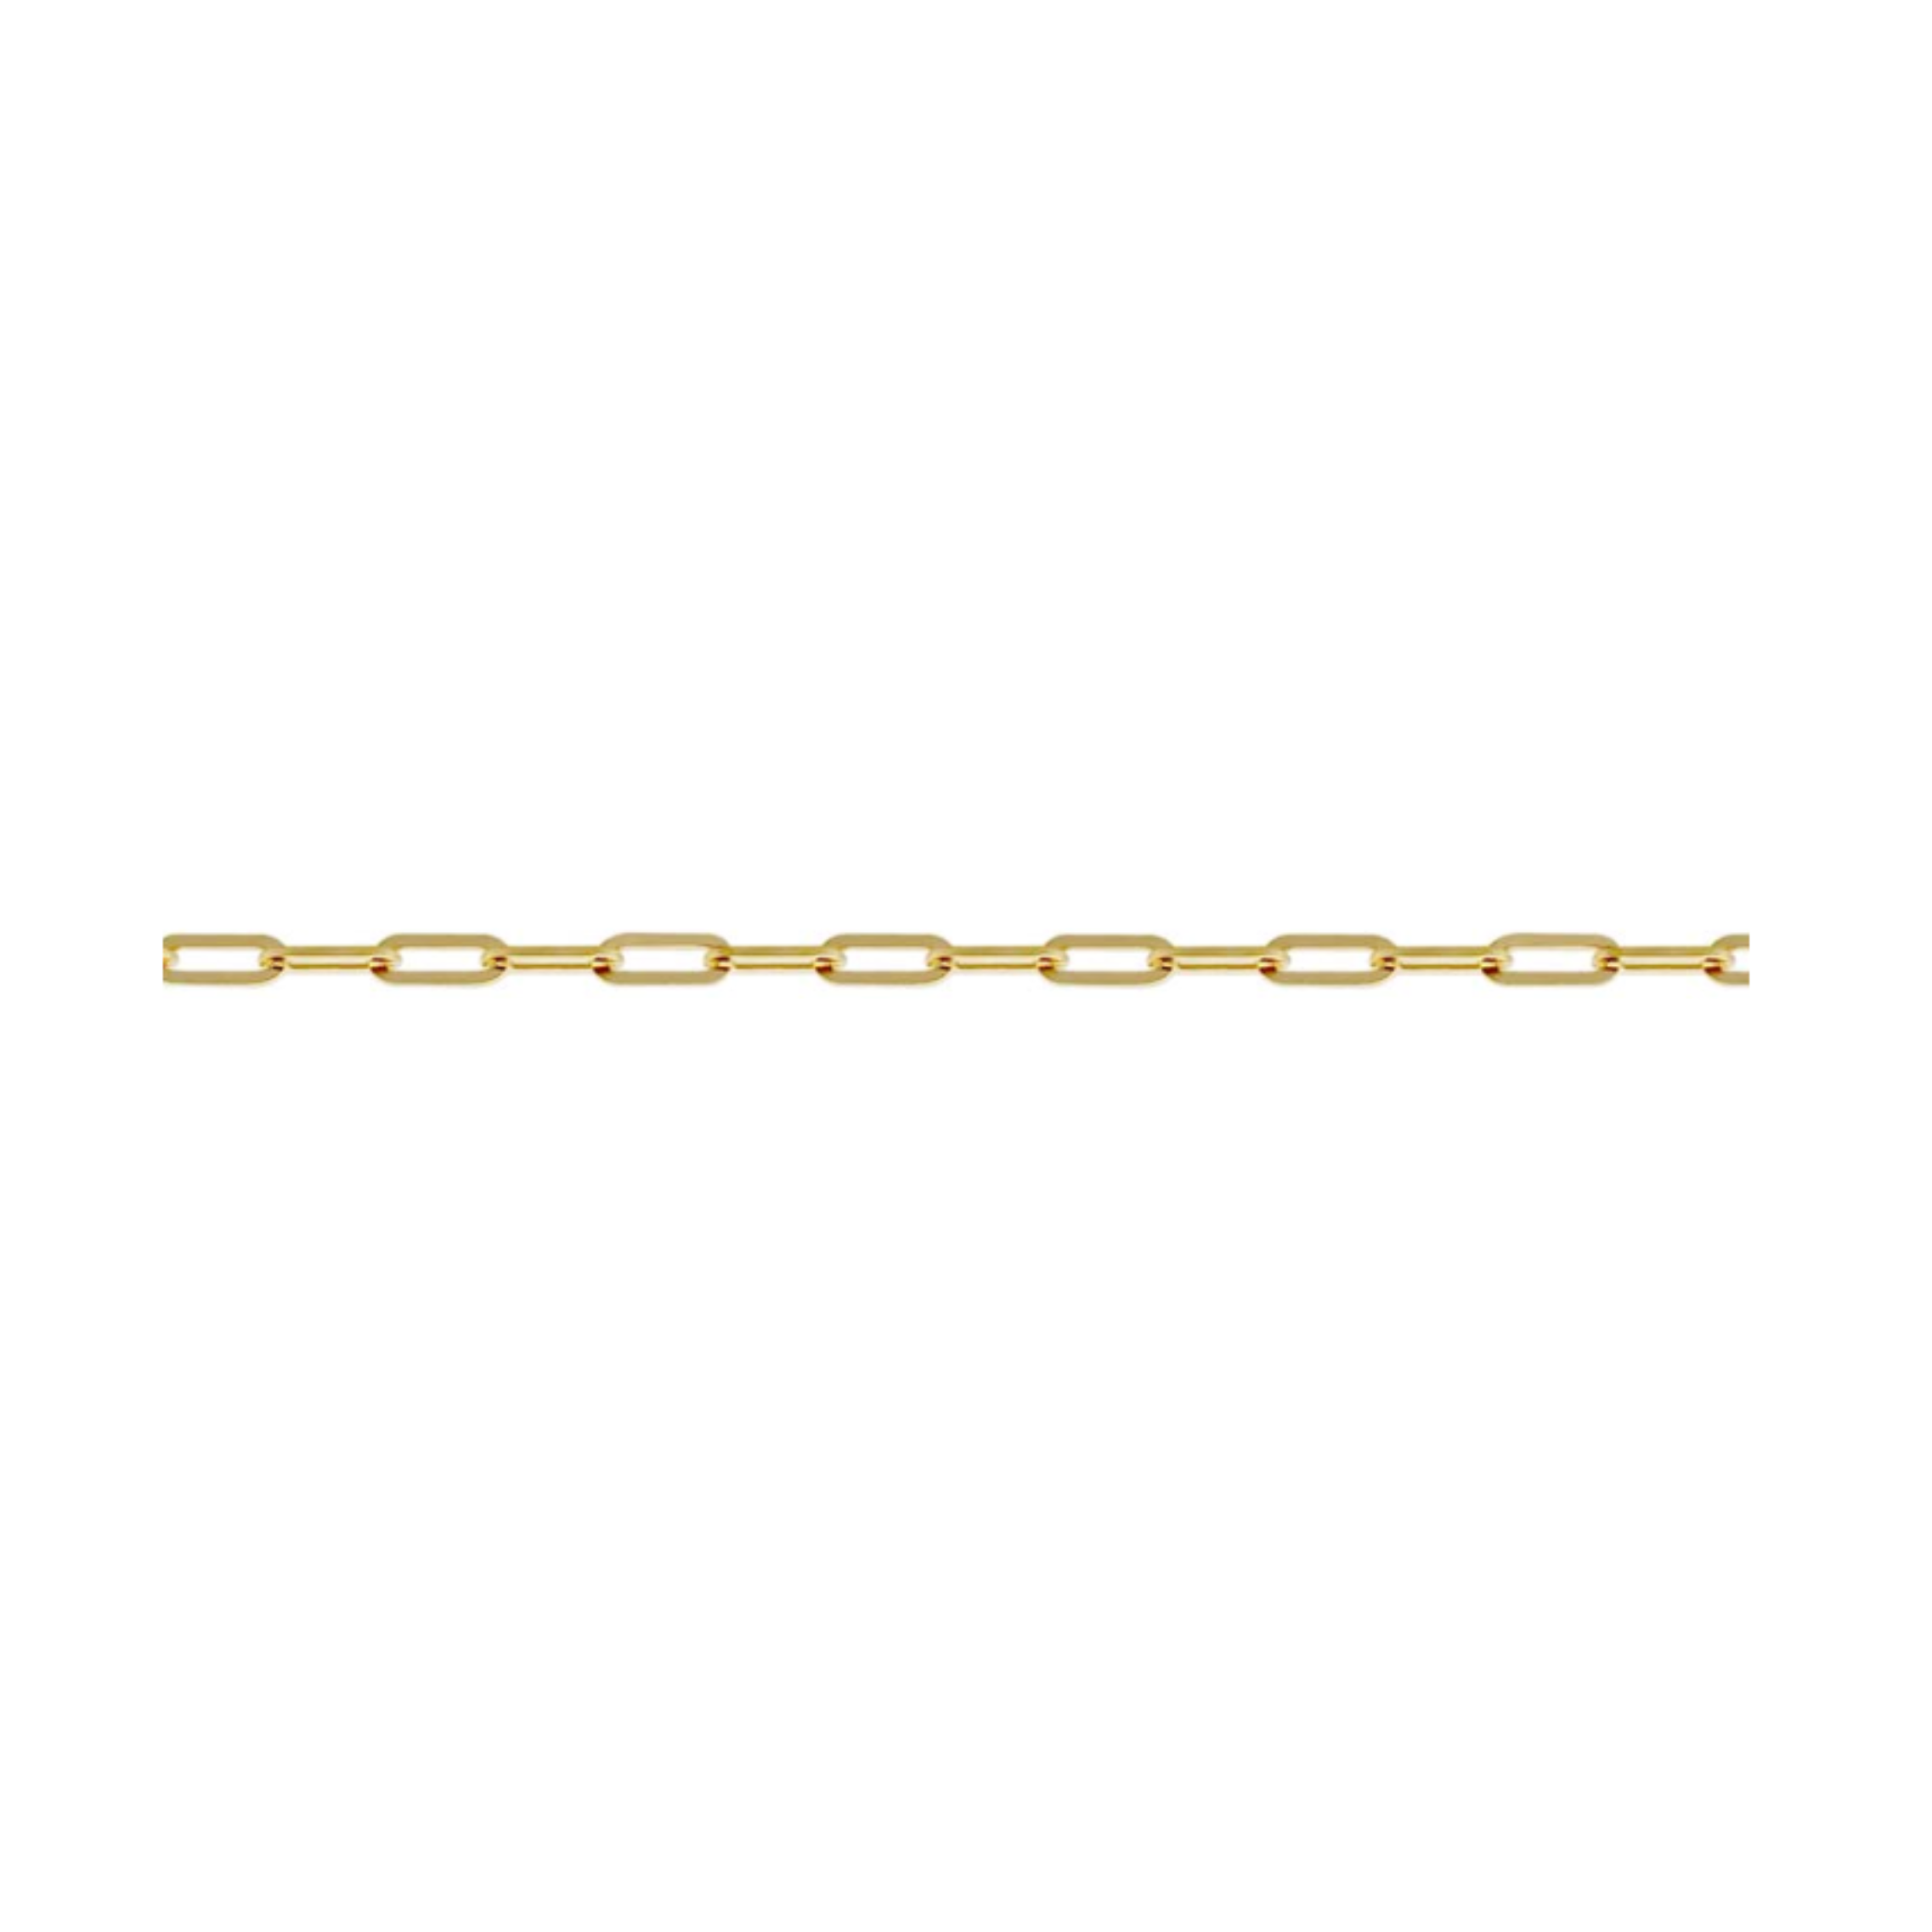 Elongated Anchor Chain, yellow gold chain, gold chain, fine paperclip chain, gold pendant chain, Danielle Camera Jewellery